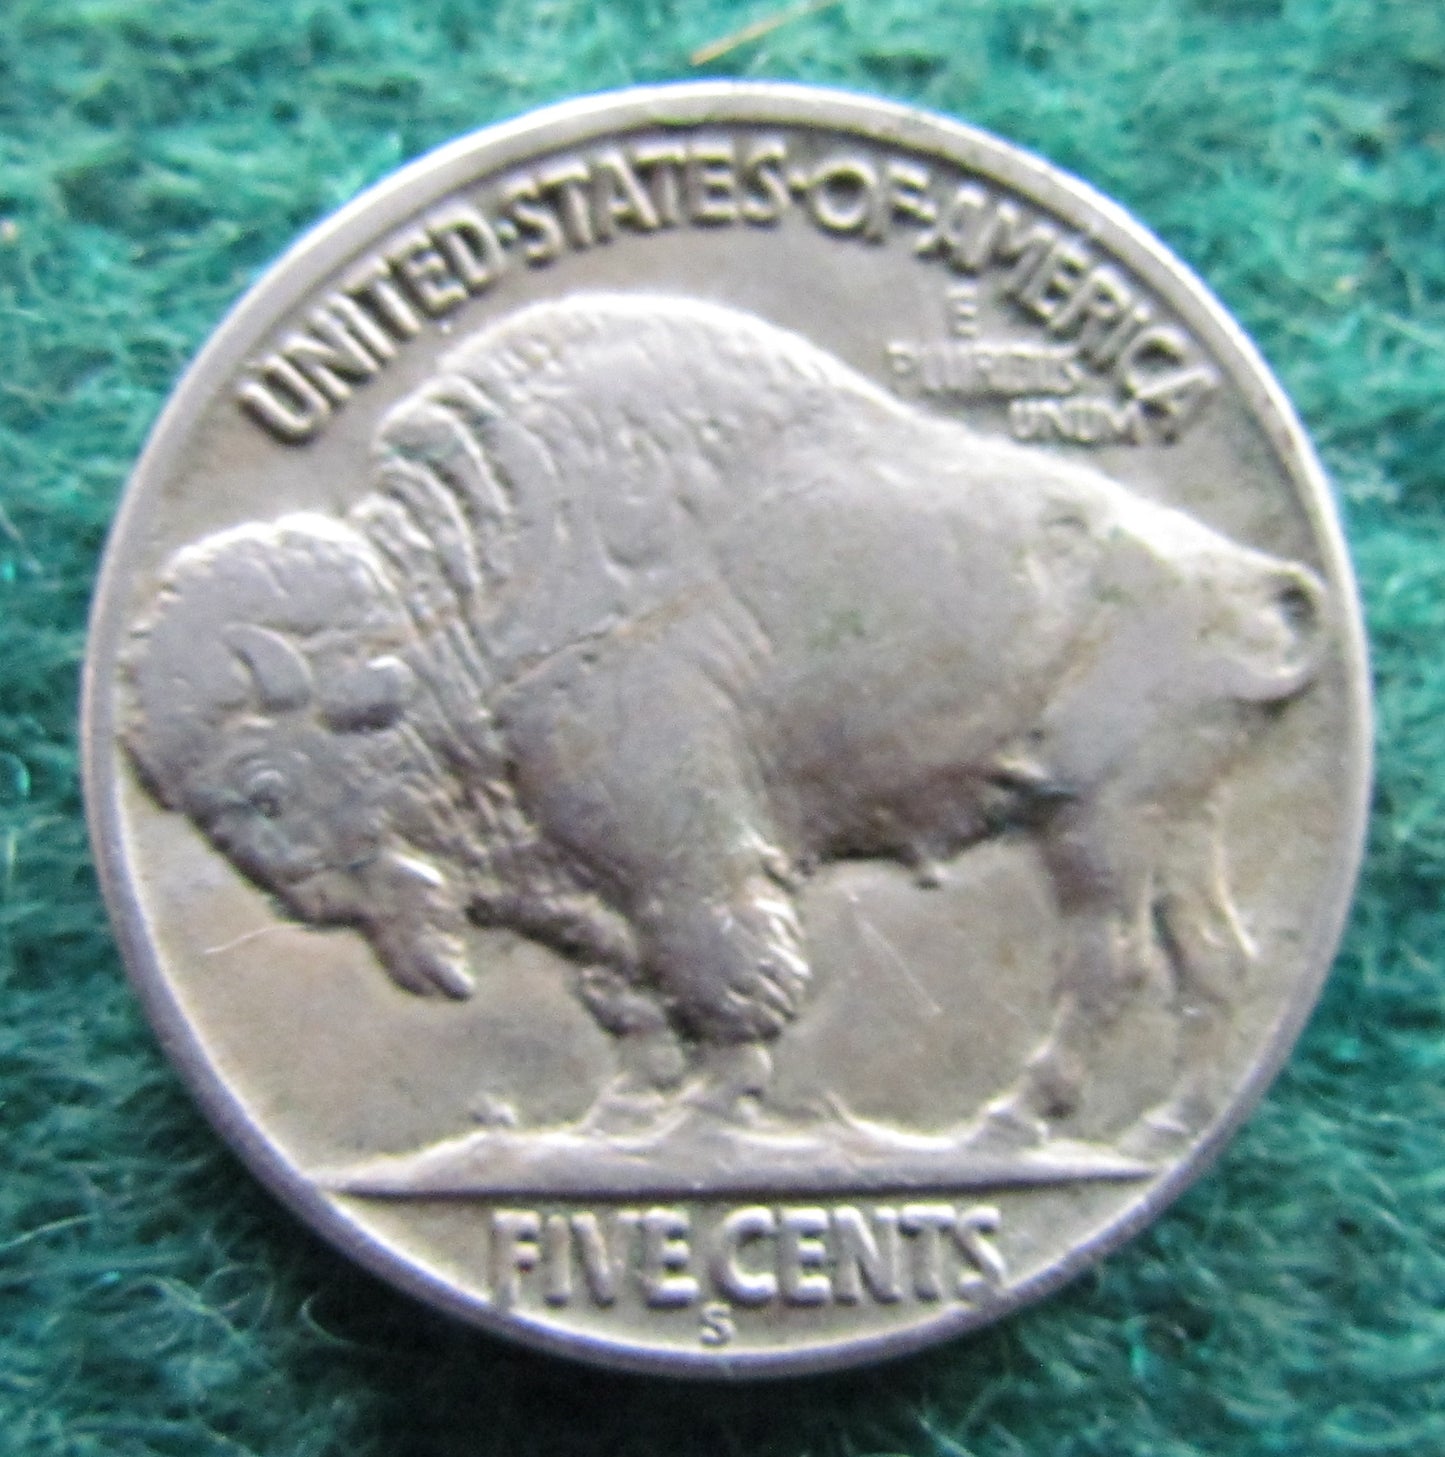 USA American 1918 S Buffalo Nickel Coin - Circulated